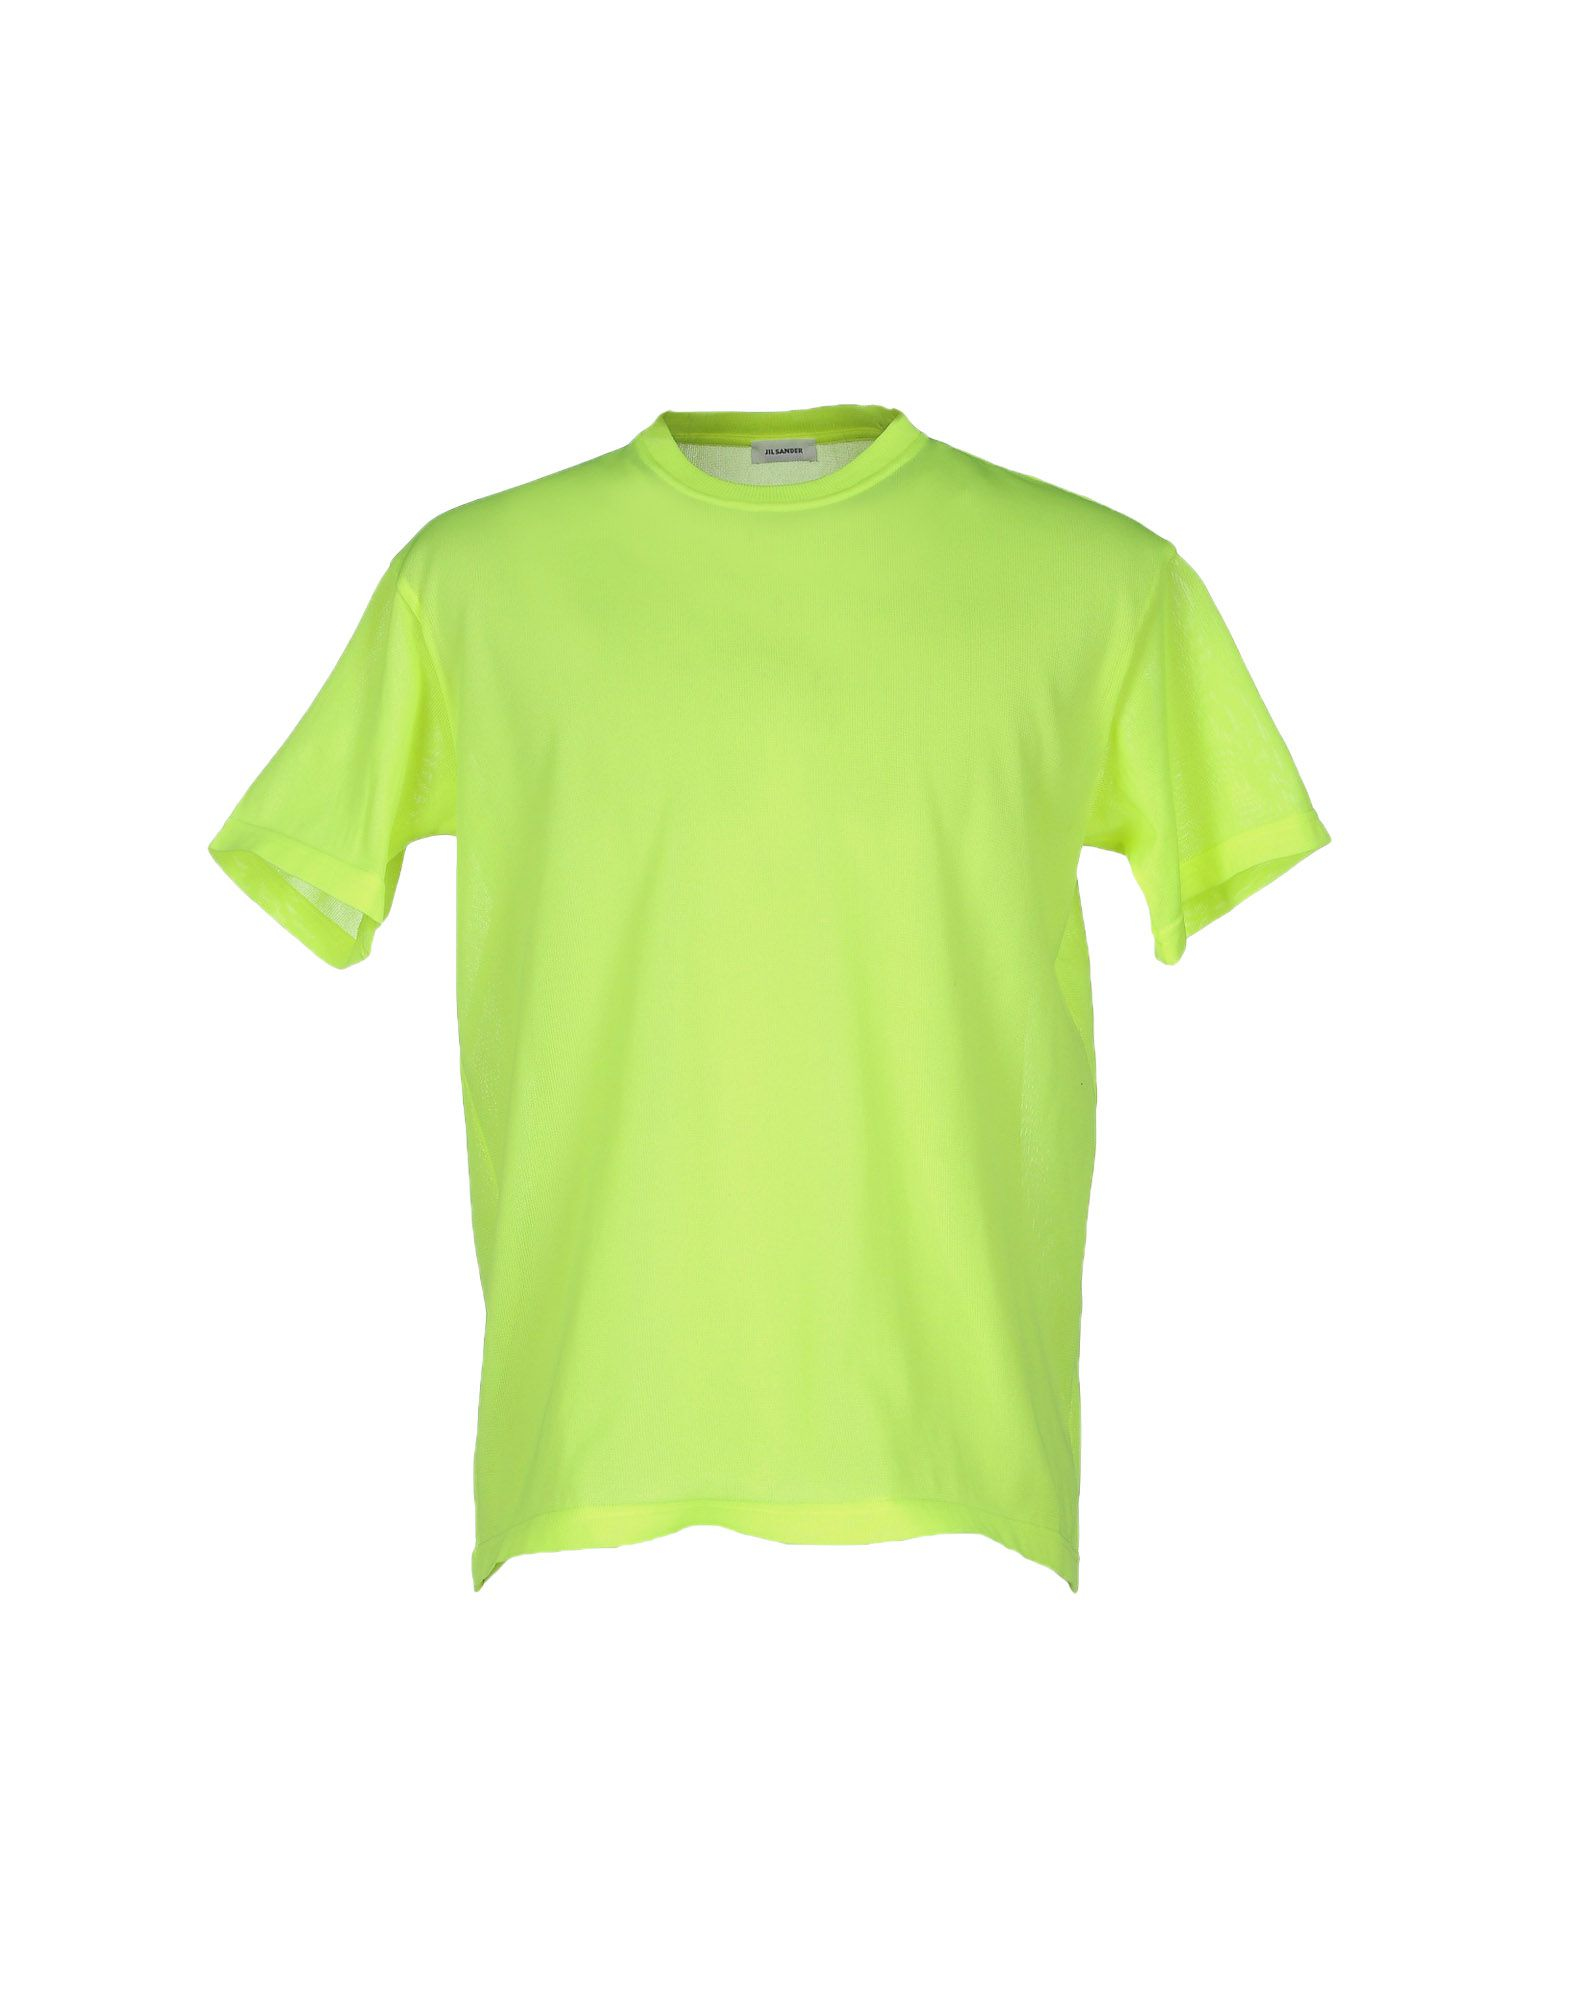 Jil sander T-shirt in Green for Men | Lyst